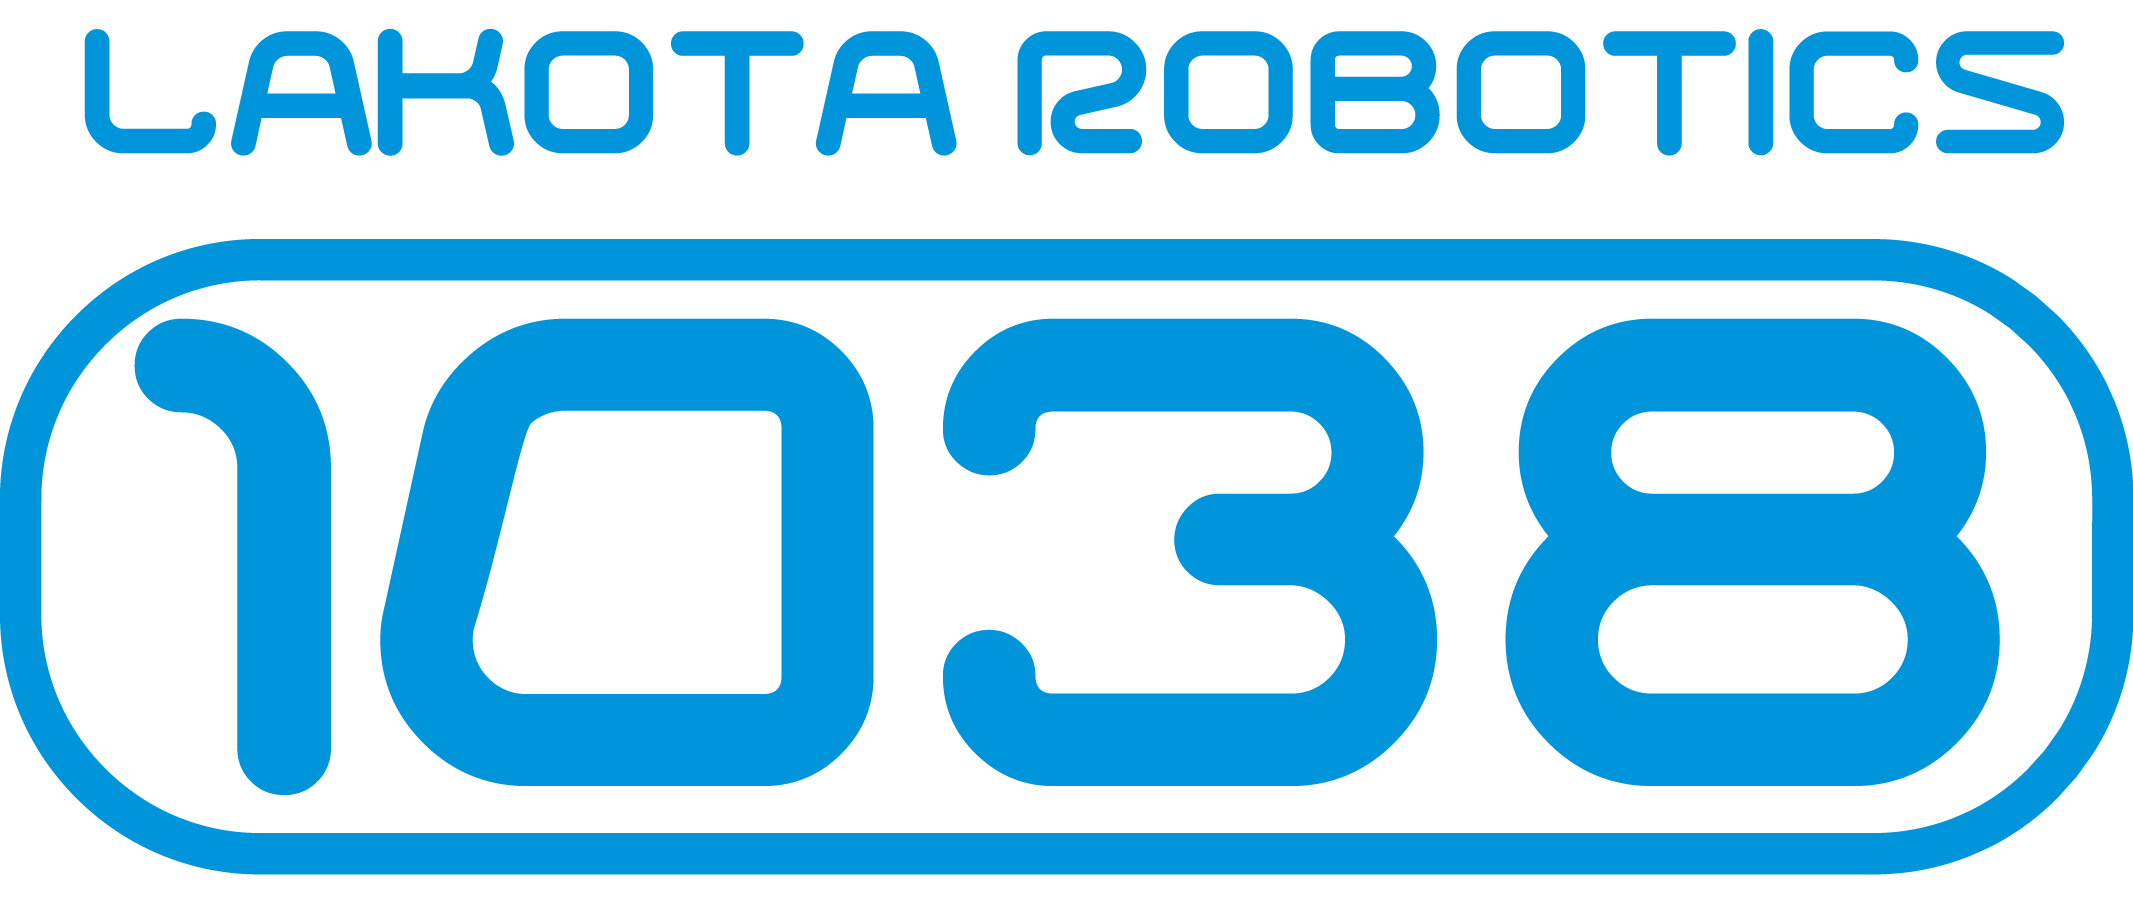 Lakota Robotics